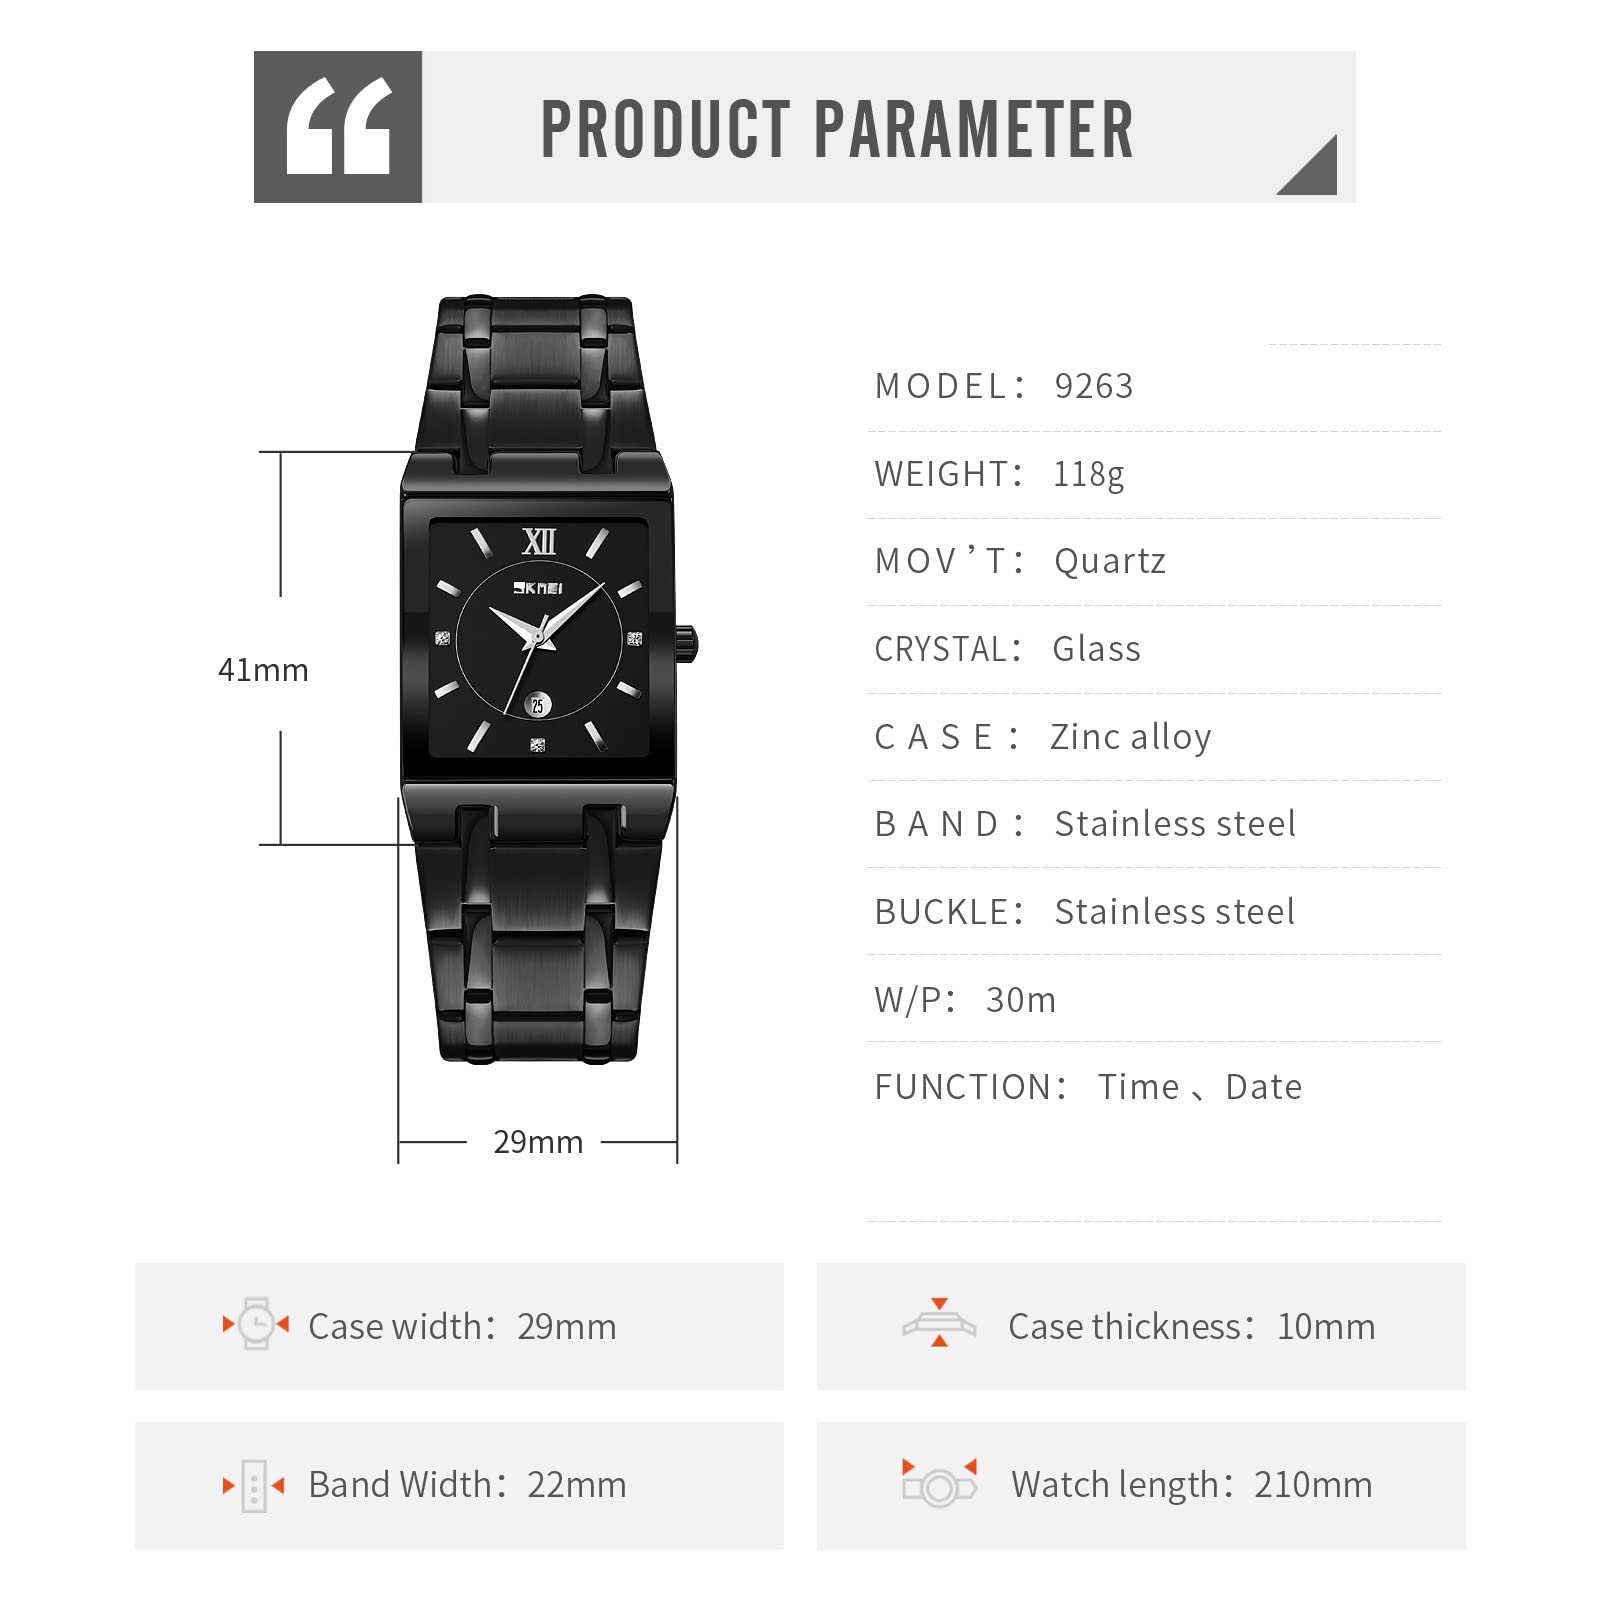 Reginald Fashion Square Watches for Men Date Waterproof Analog Quartz Watch Stainless Steel Fashion Business Casual Wristwatch